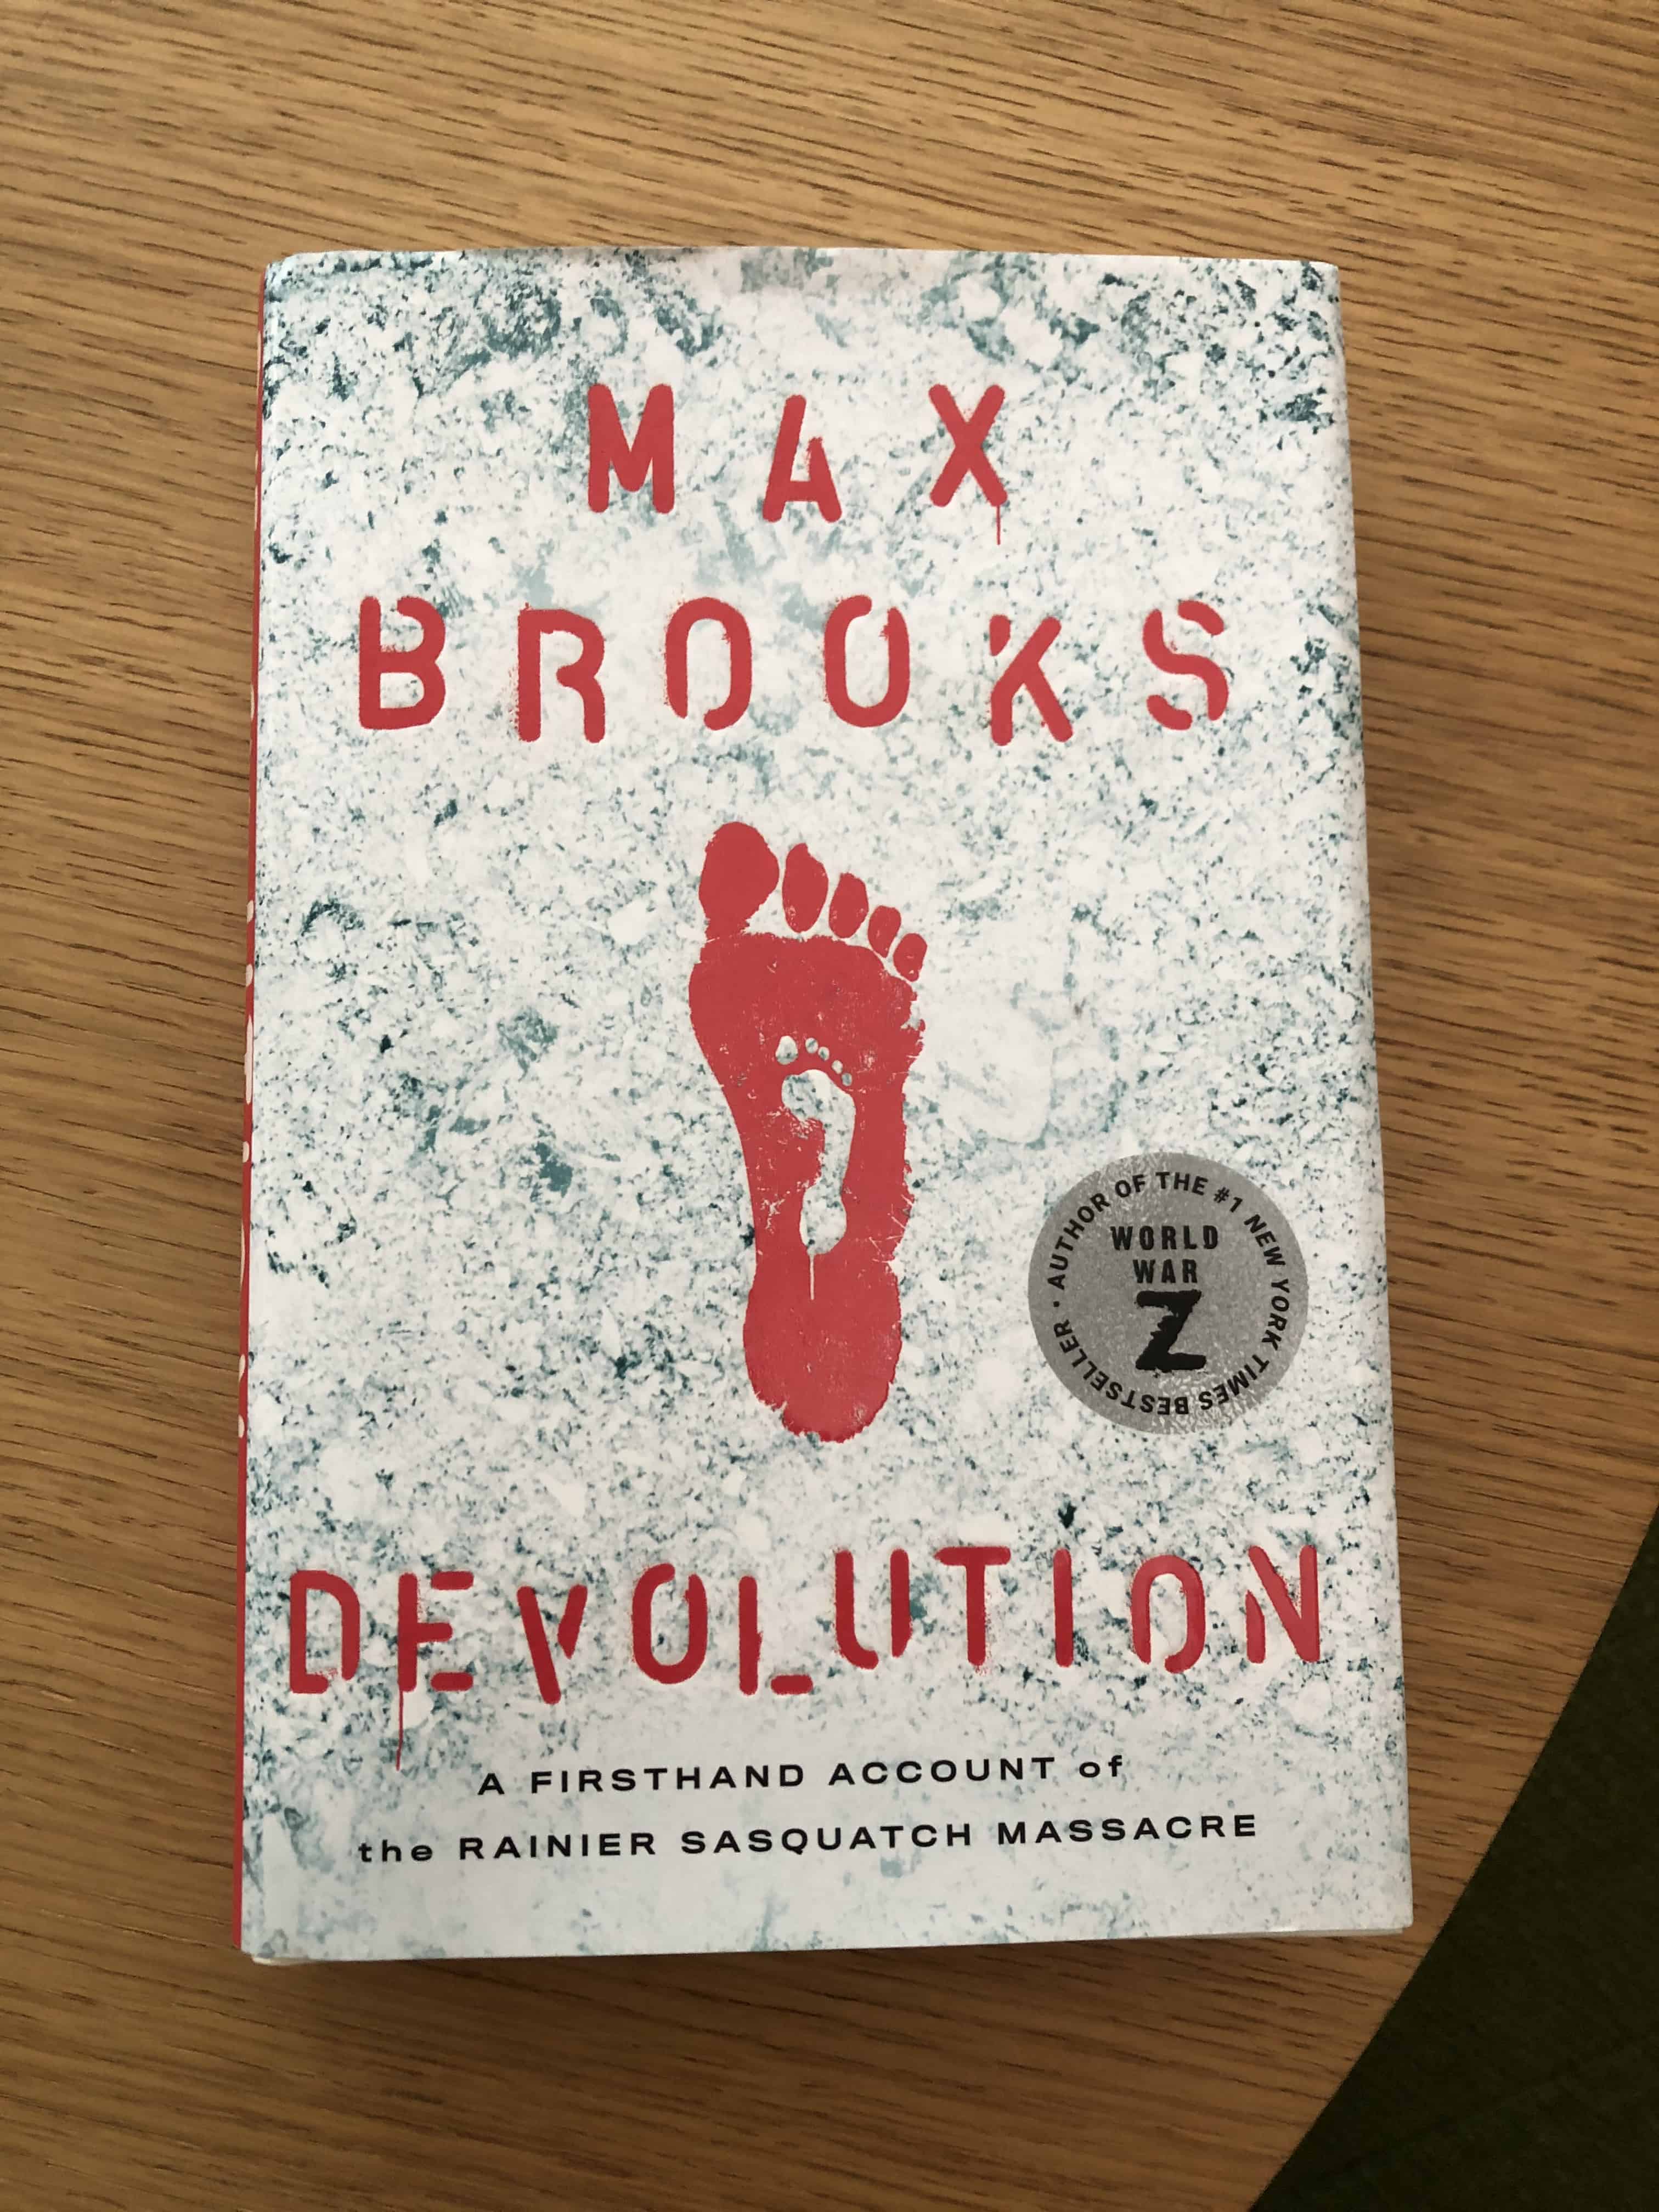 Mike’s Book Report: Devolution (2020)